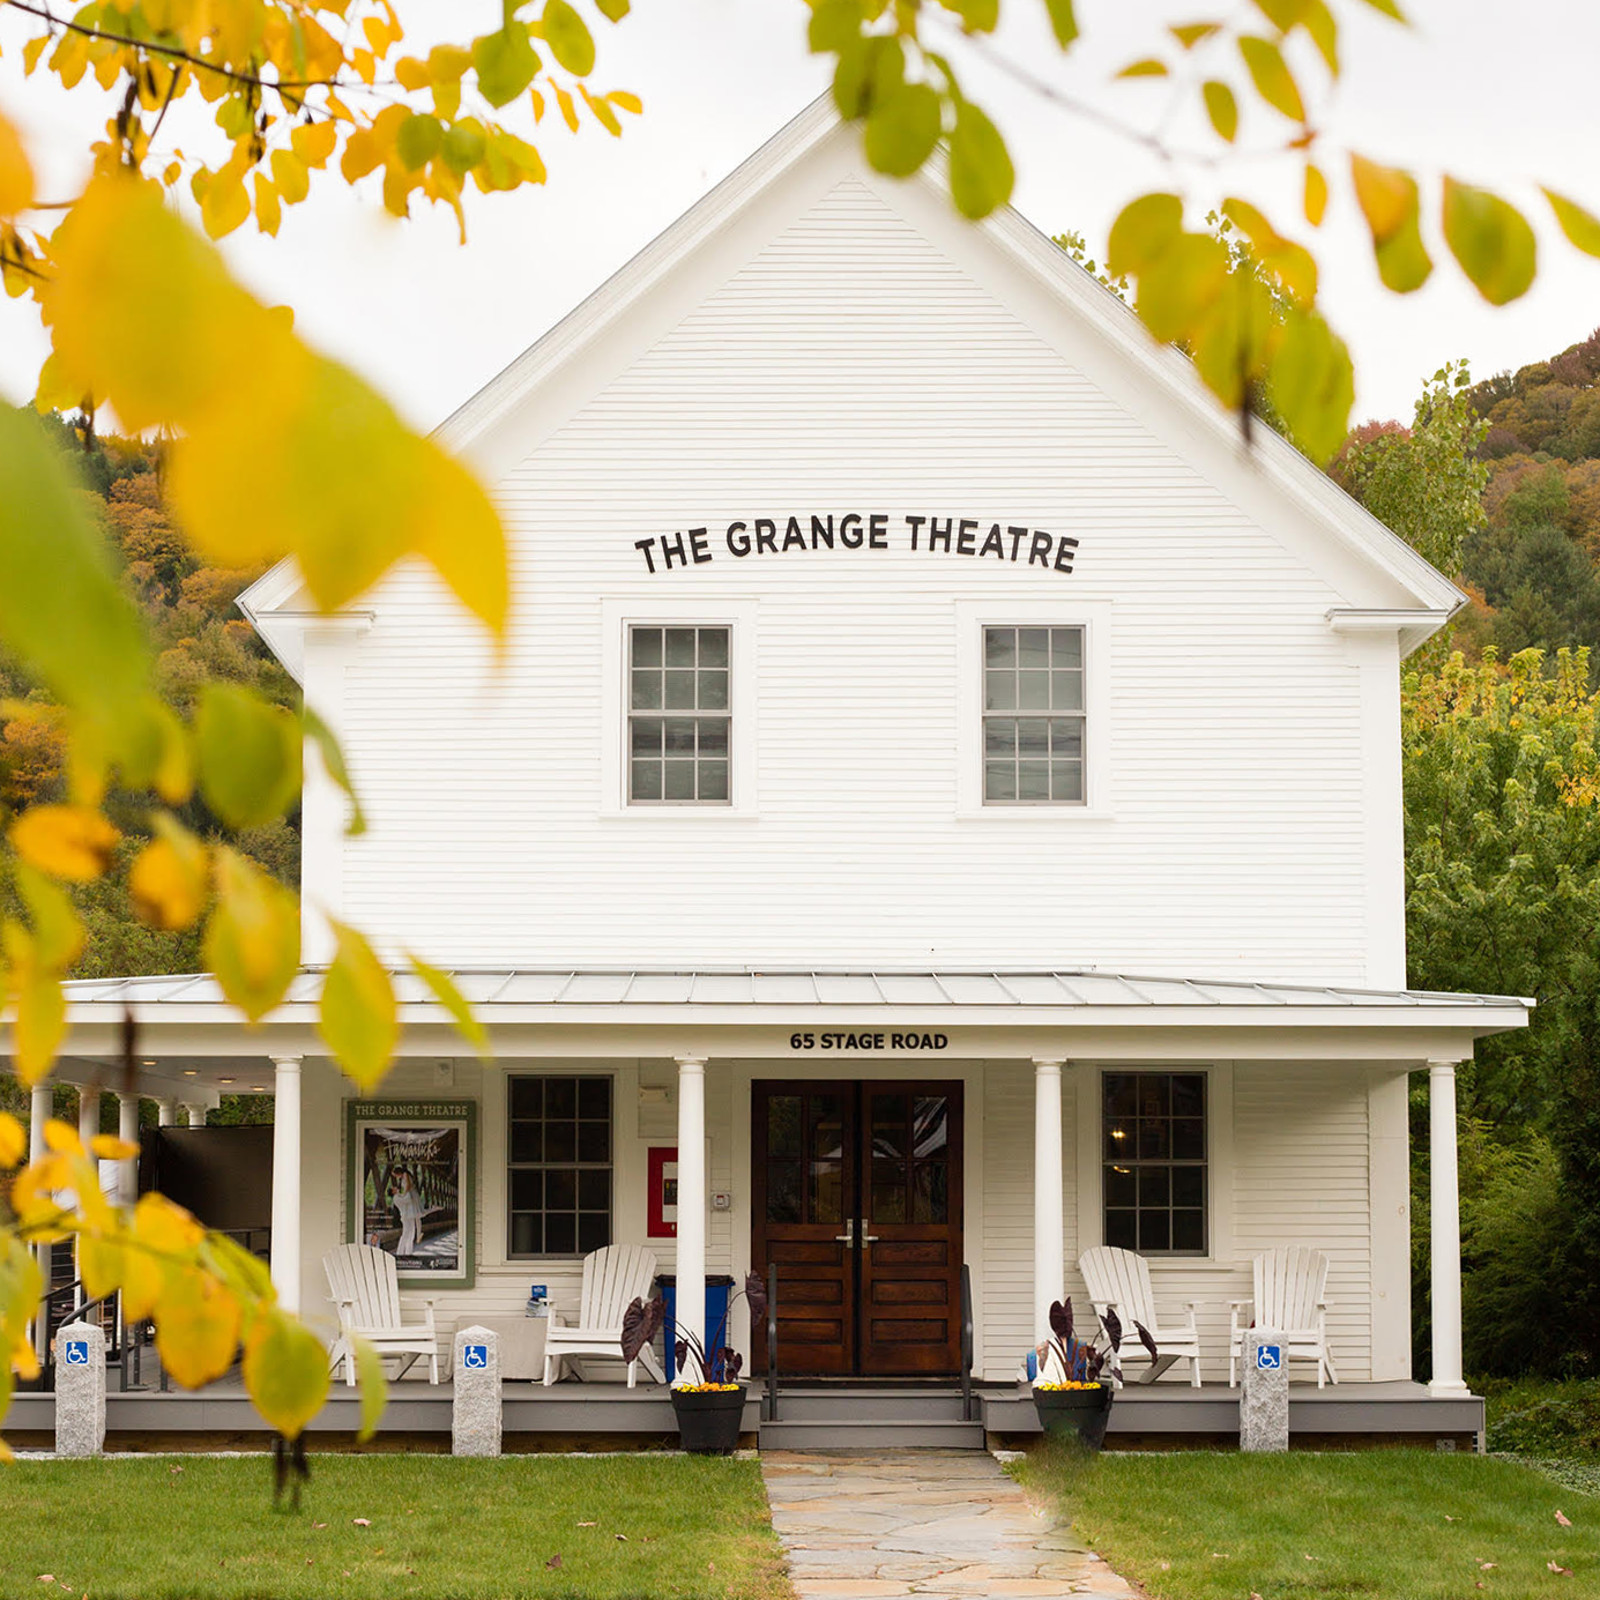 The Grange Theatre in South Pomfret